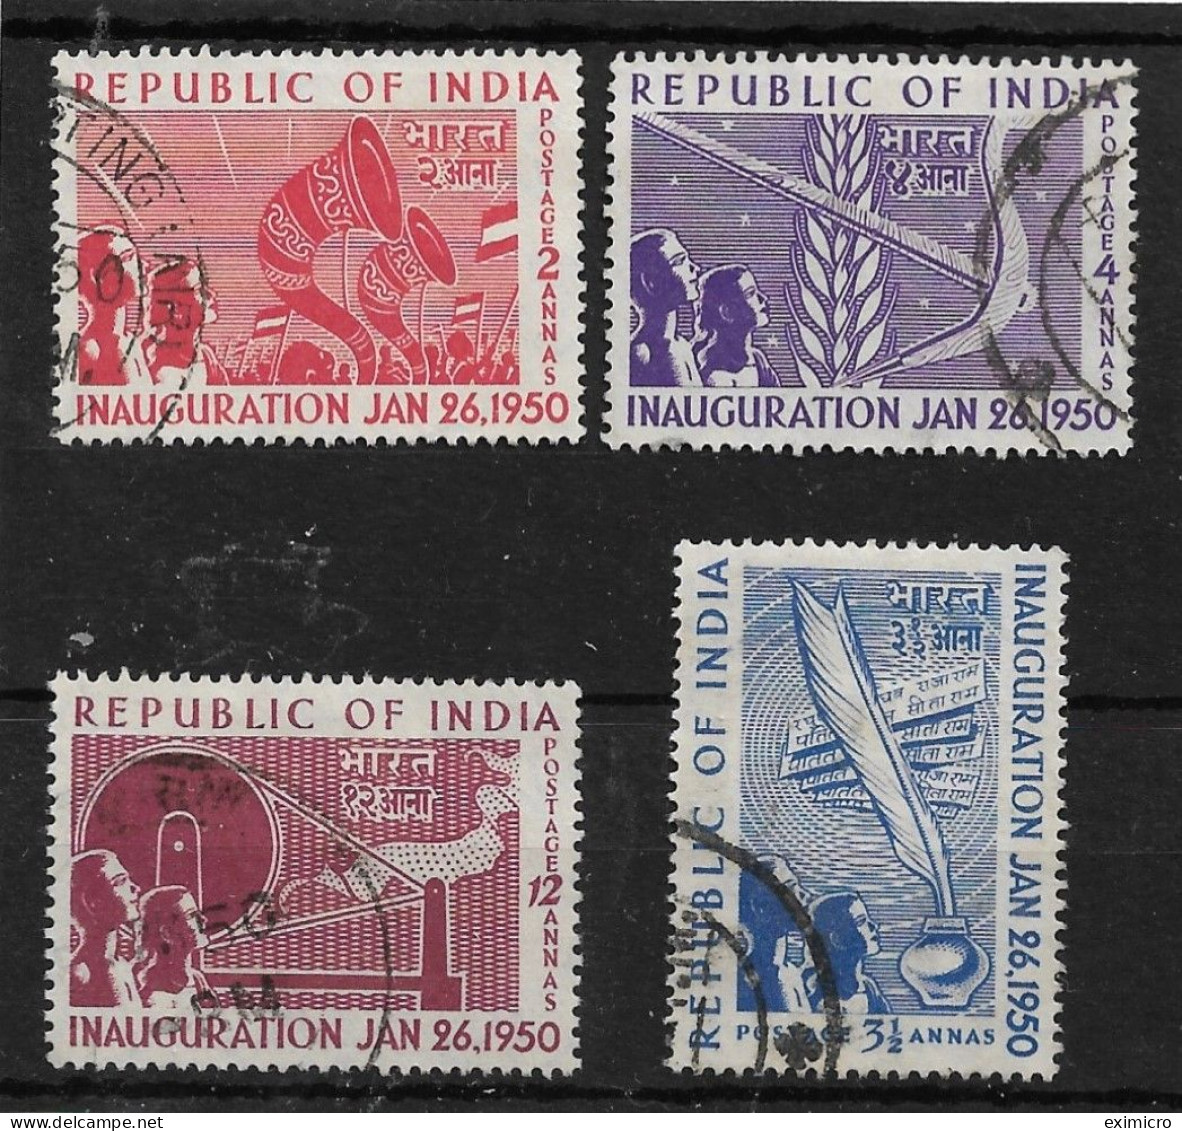 INDIA 1950 INAUGURATION OF REPUBLIC SET SG 329/332 FINE USED Cat £17 - Usati